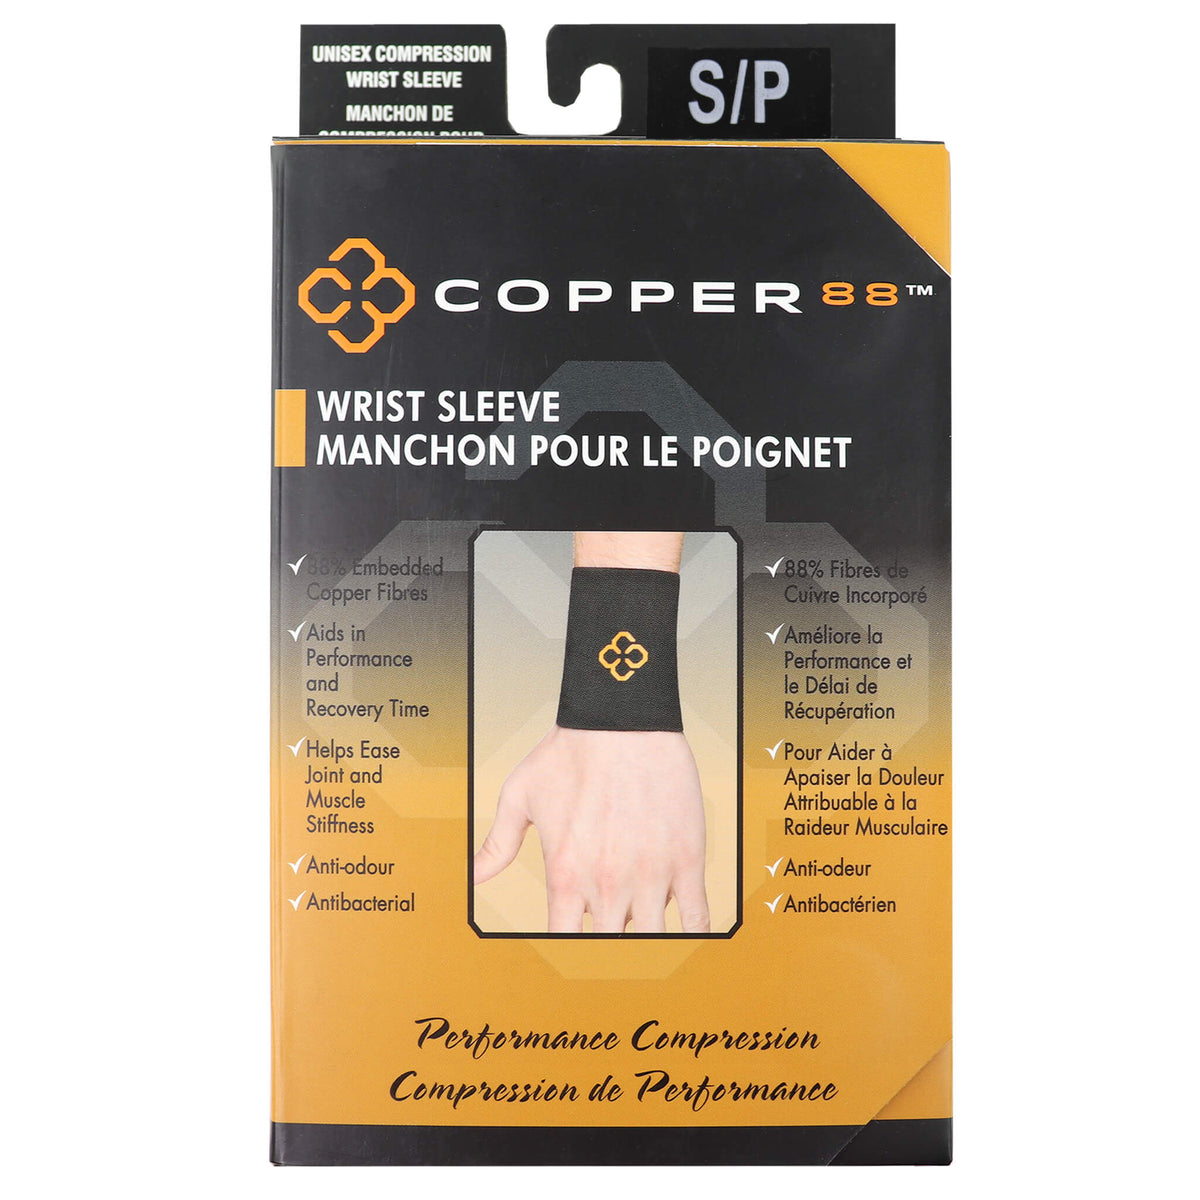 Copper88 Wrist Compression Sleeve, Anti-odour